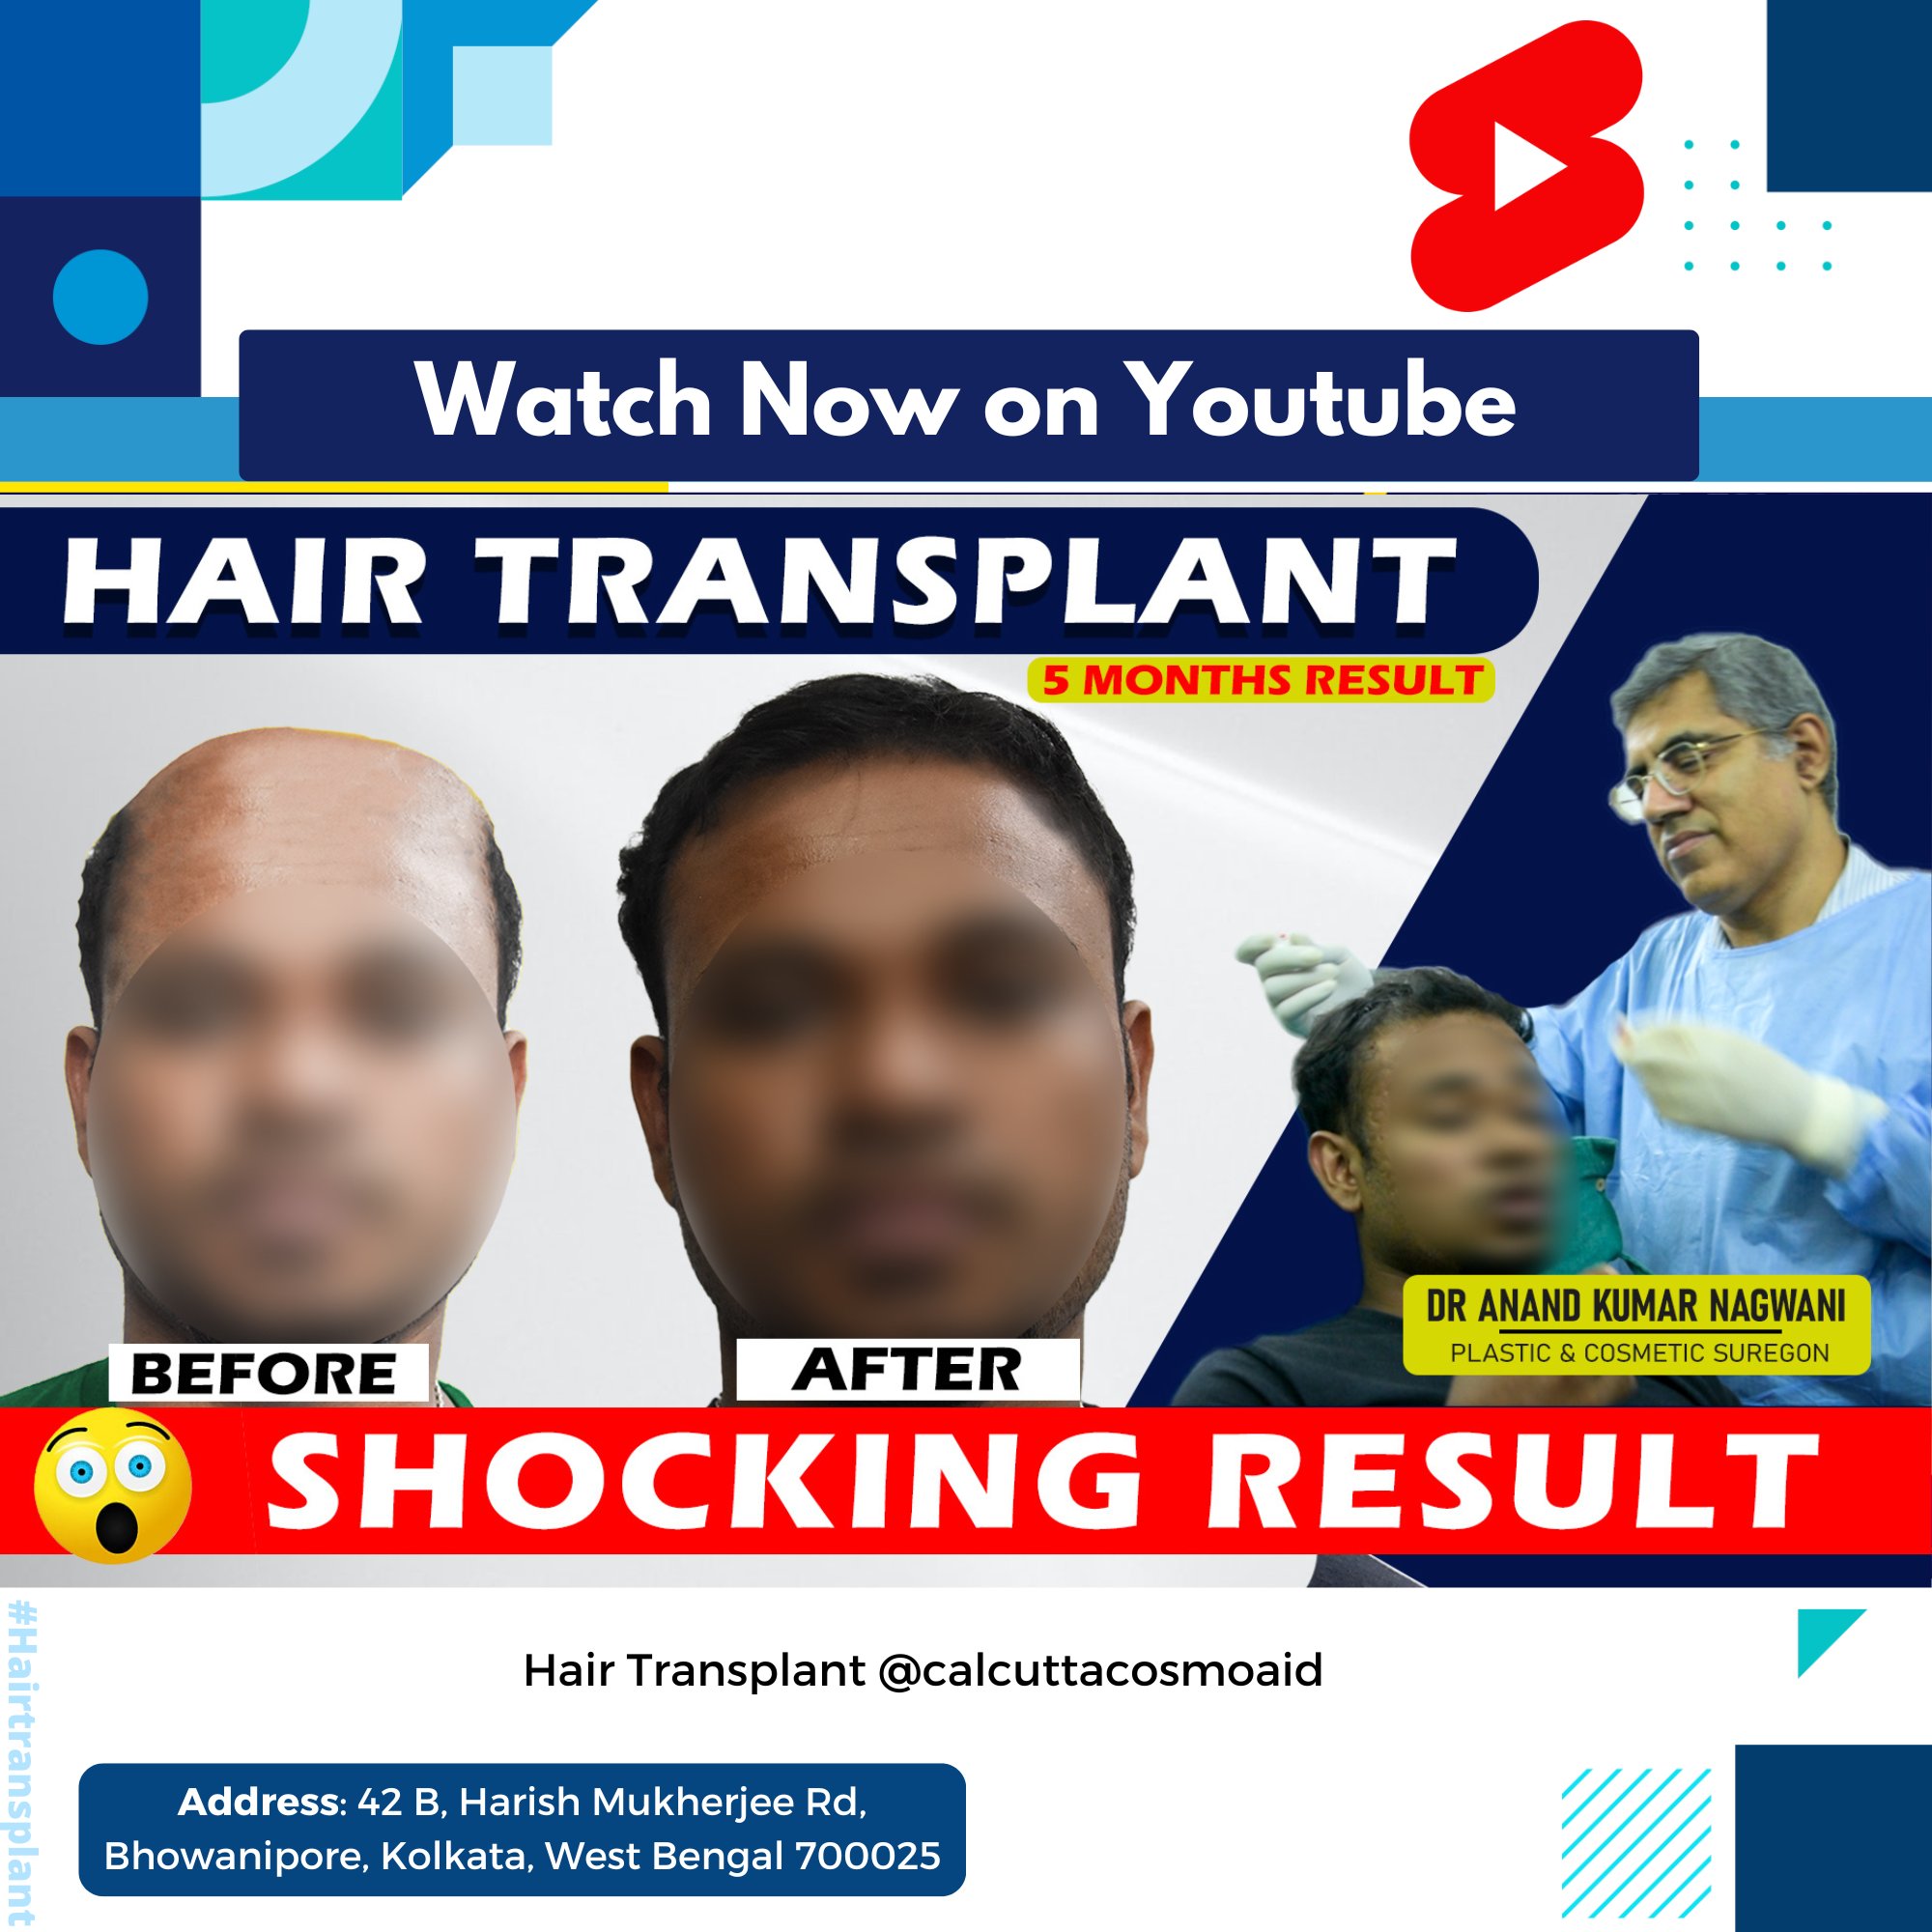 Dr Anand K Nagwani - Hair Transplant on X: Breast Augmentation is